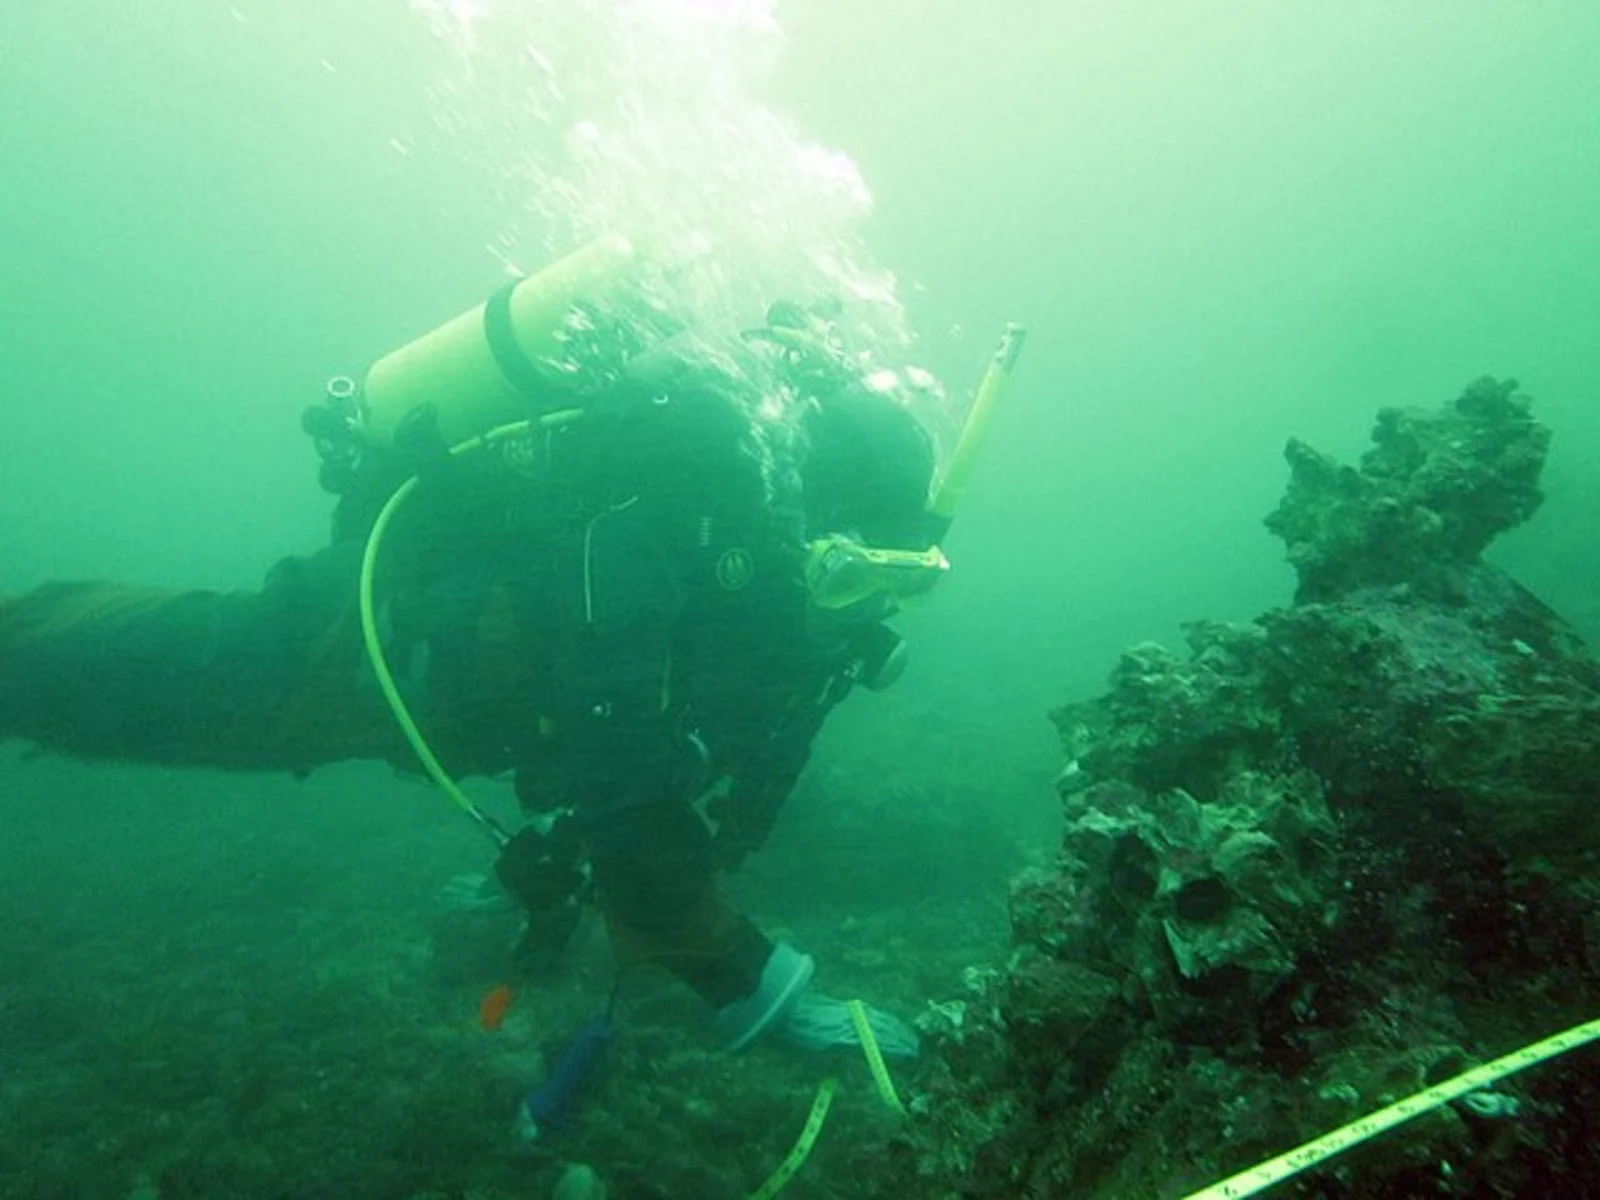 Thai divers combat 'ghost gear' threatening marine life